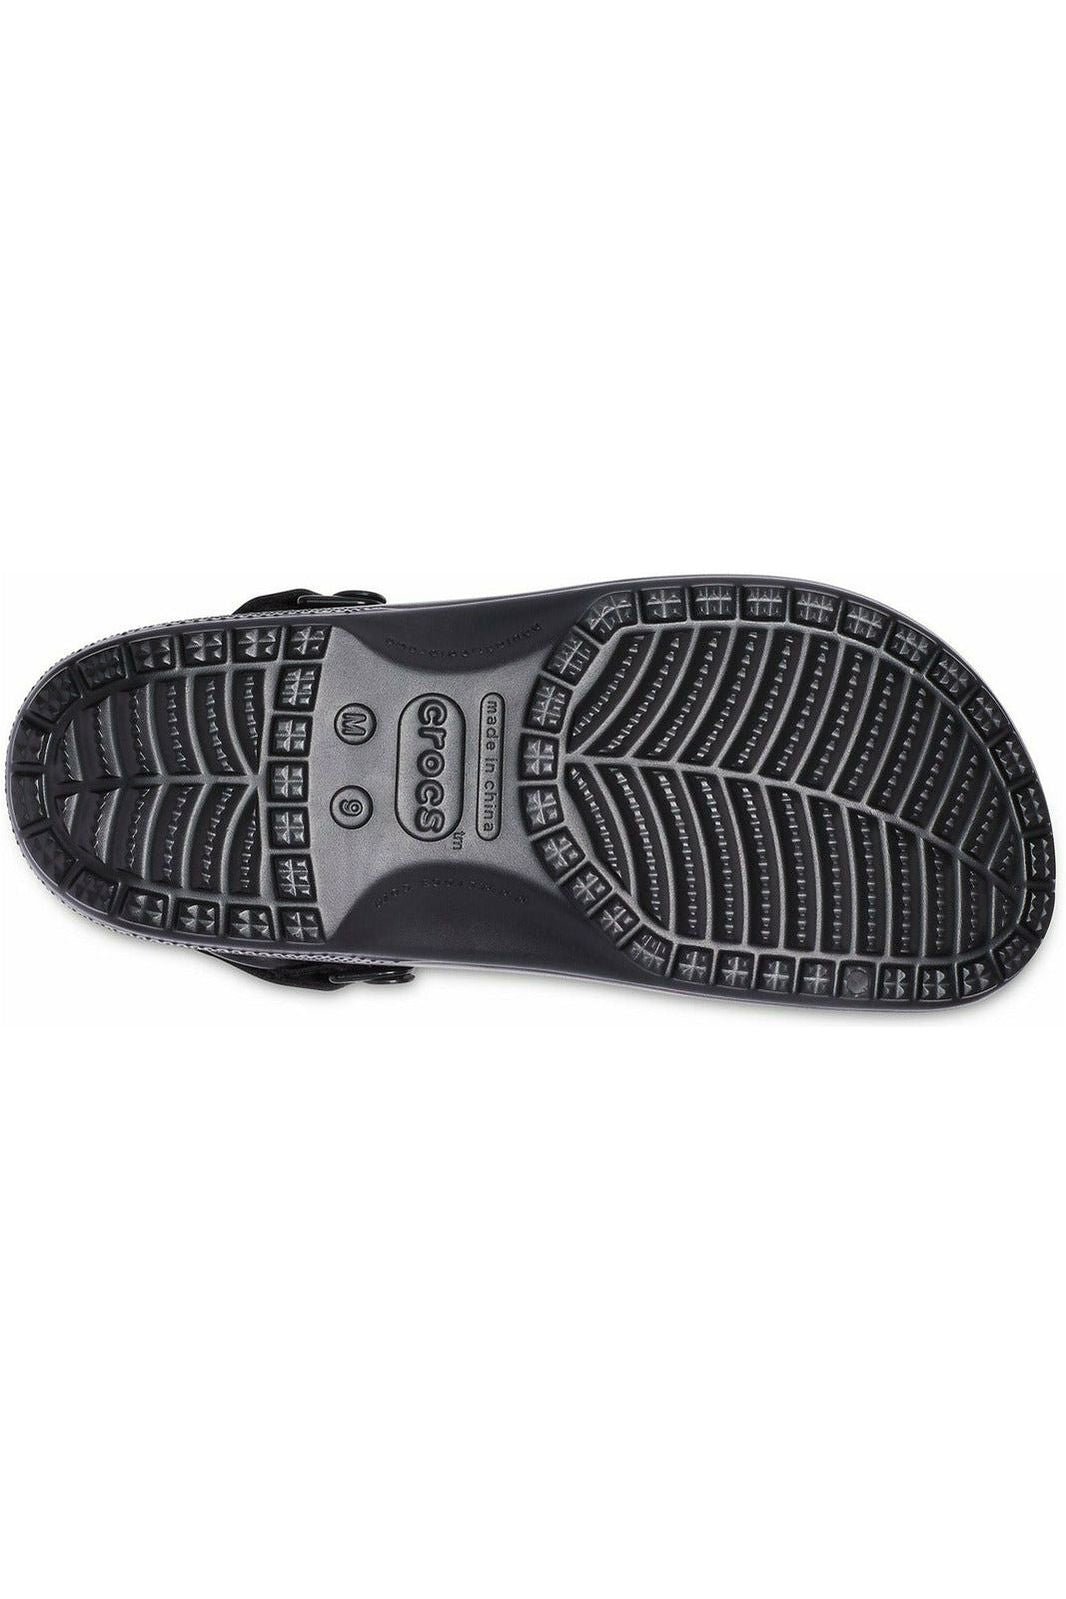 Crocs - Yukon Vista II Black Beach Shoes